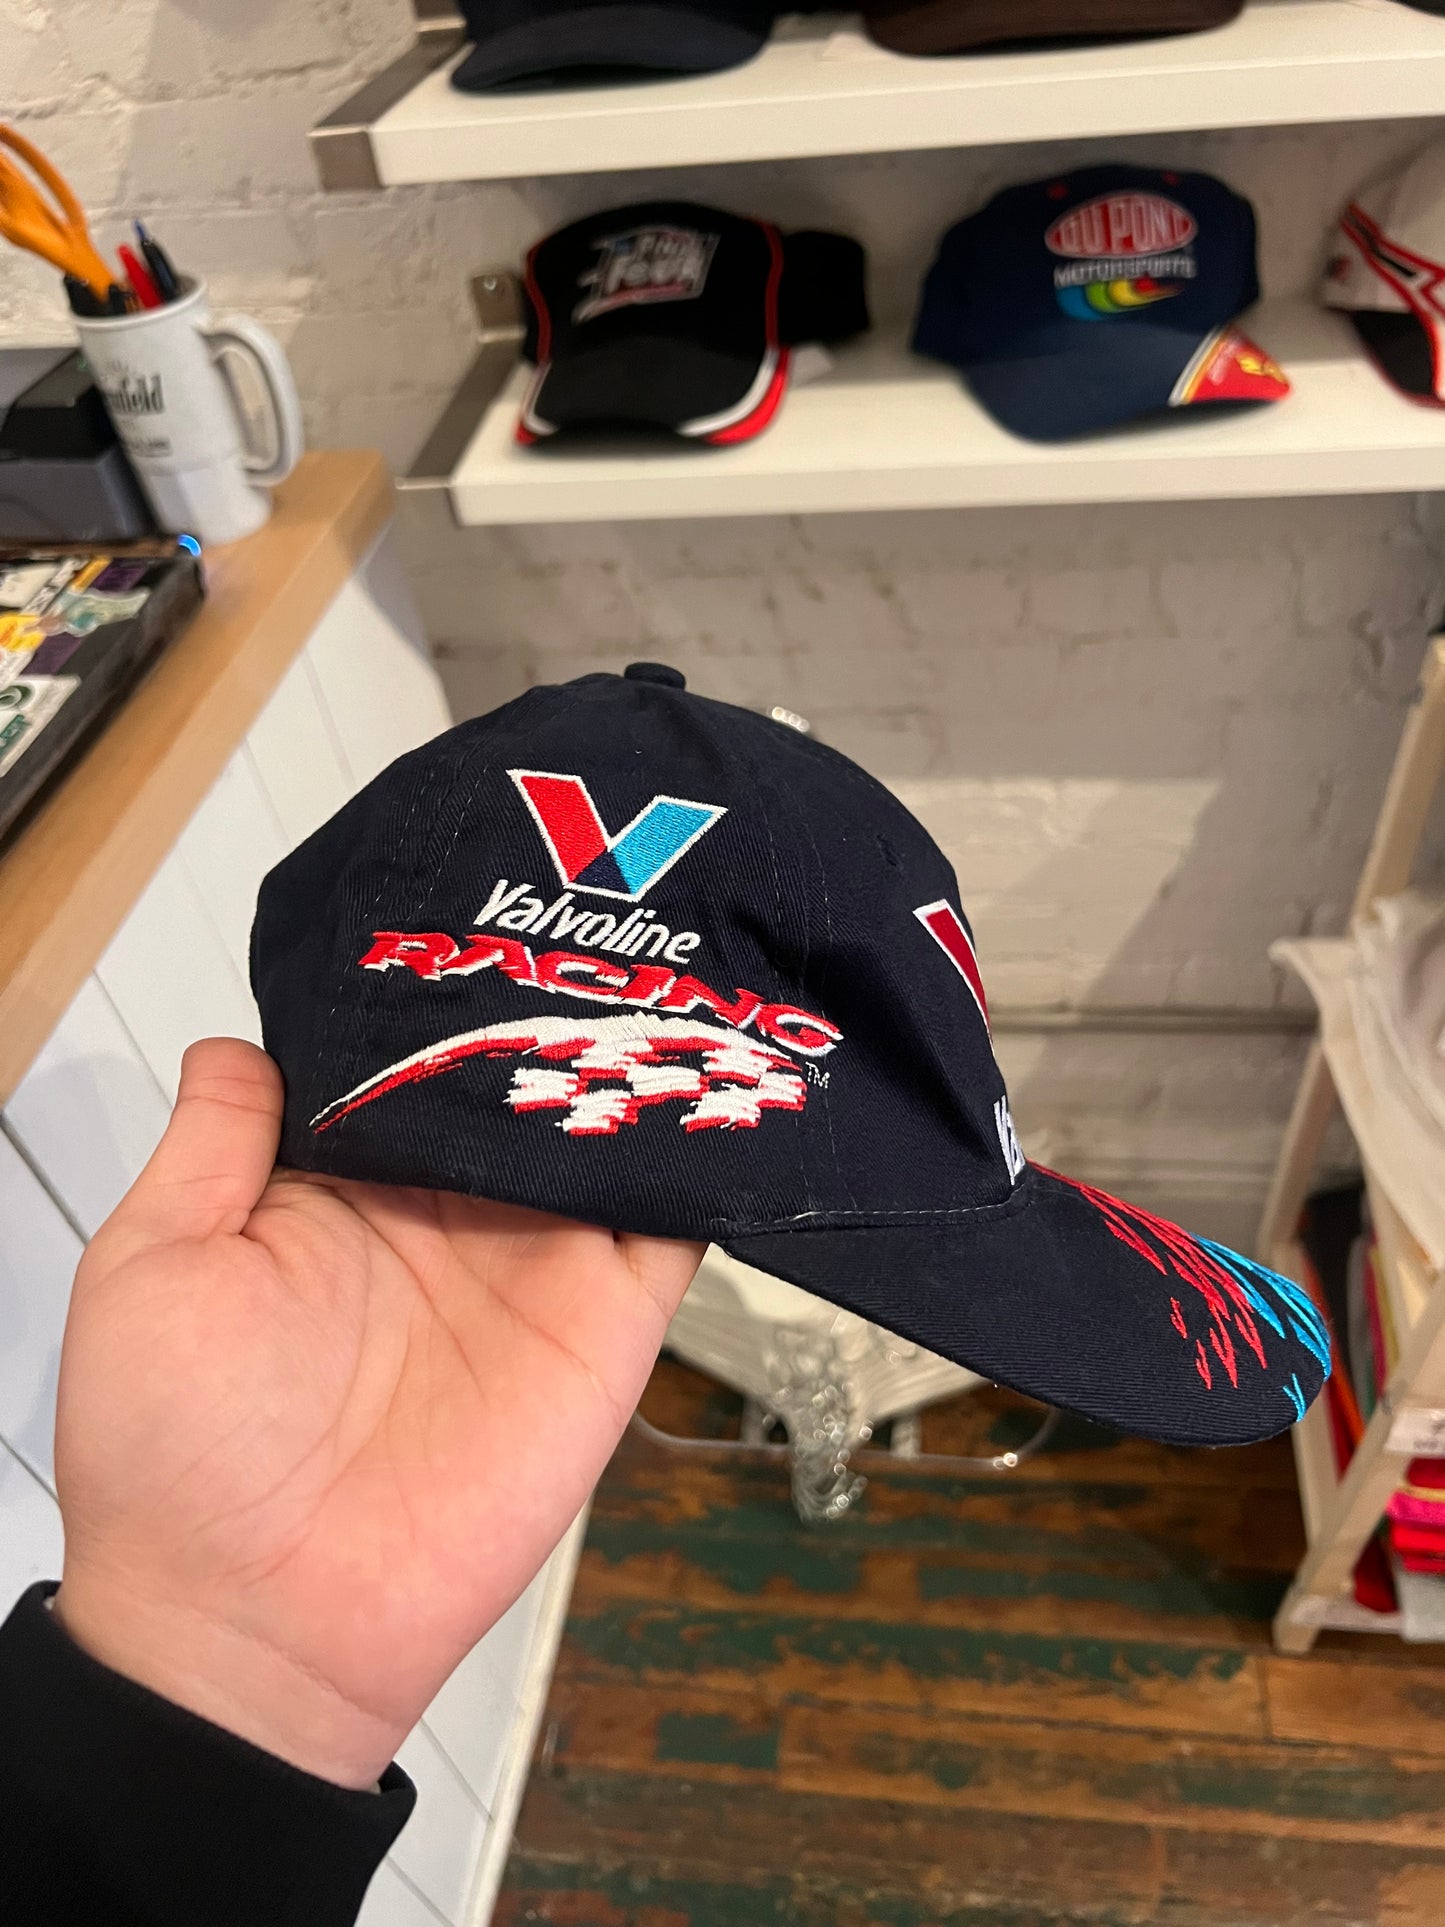 Valvoline Racing Hat